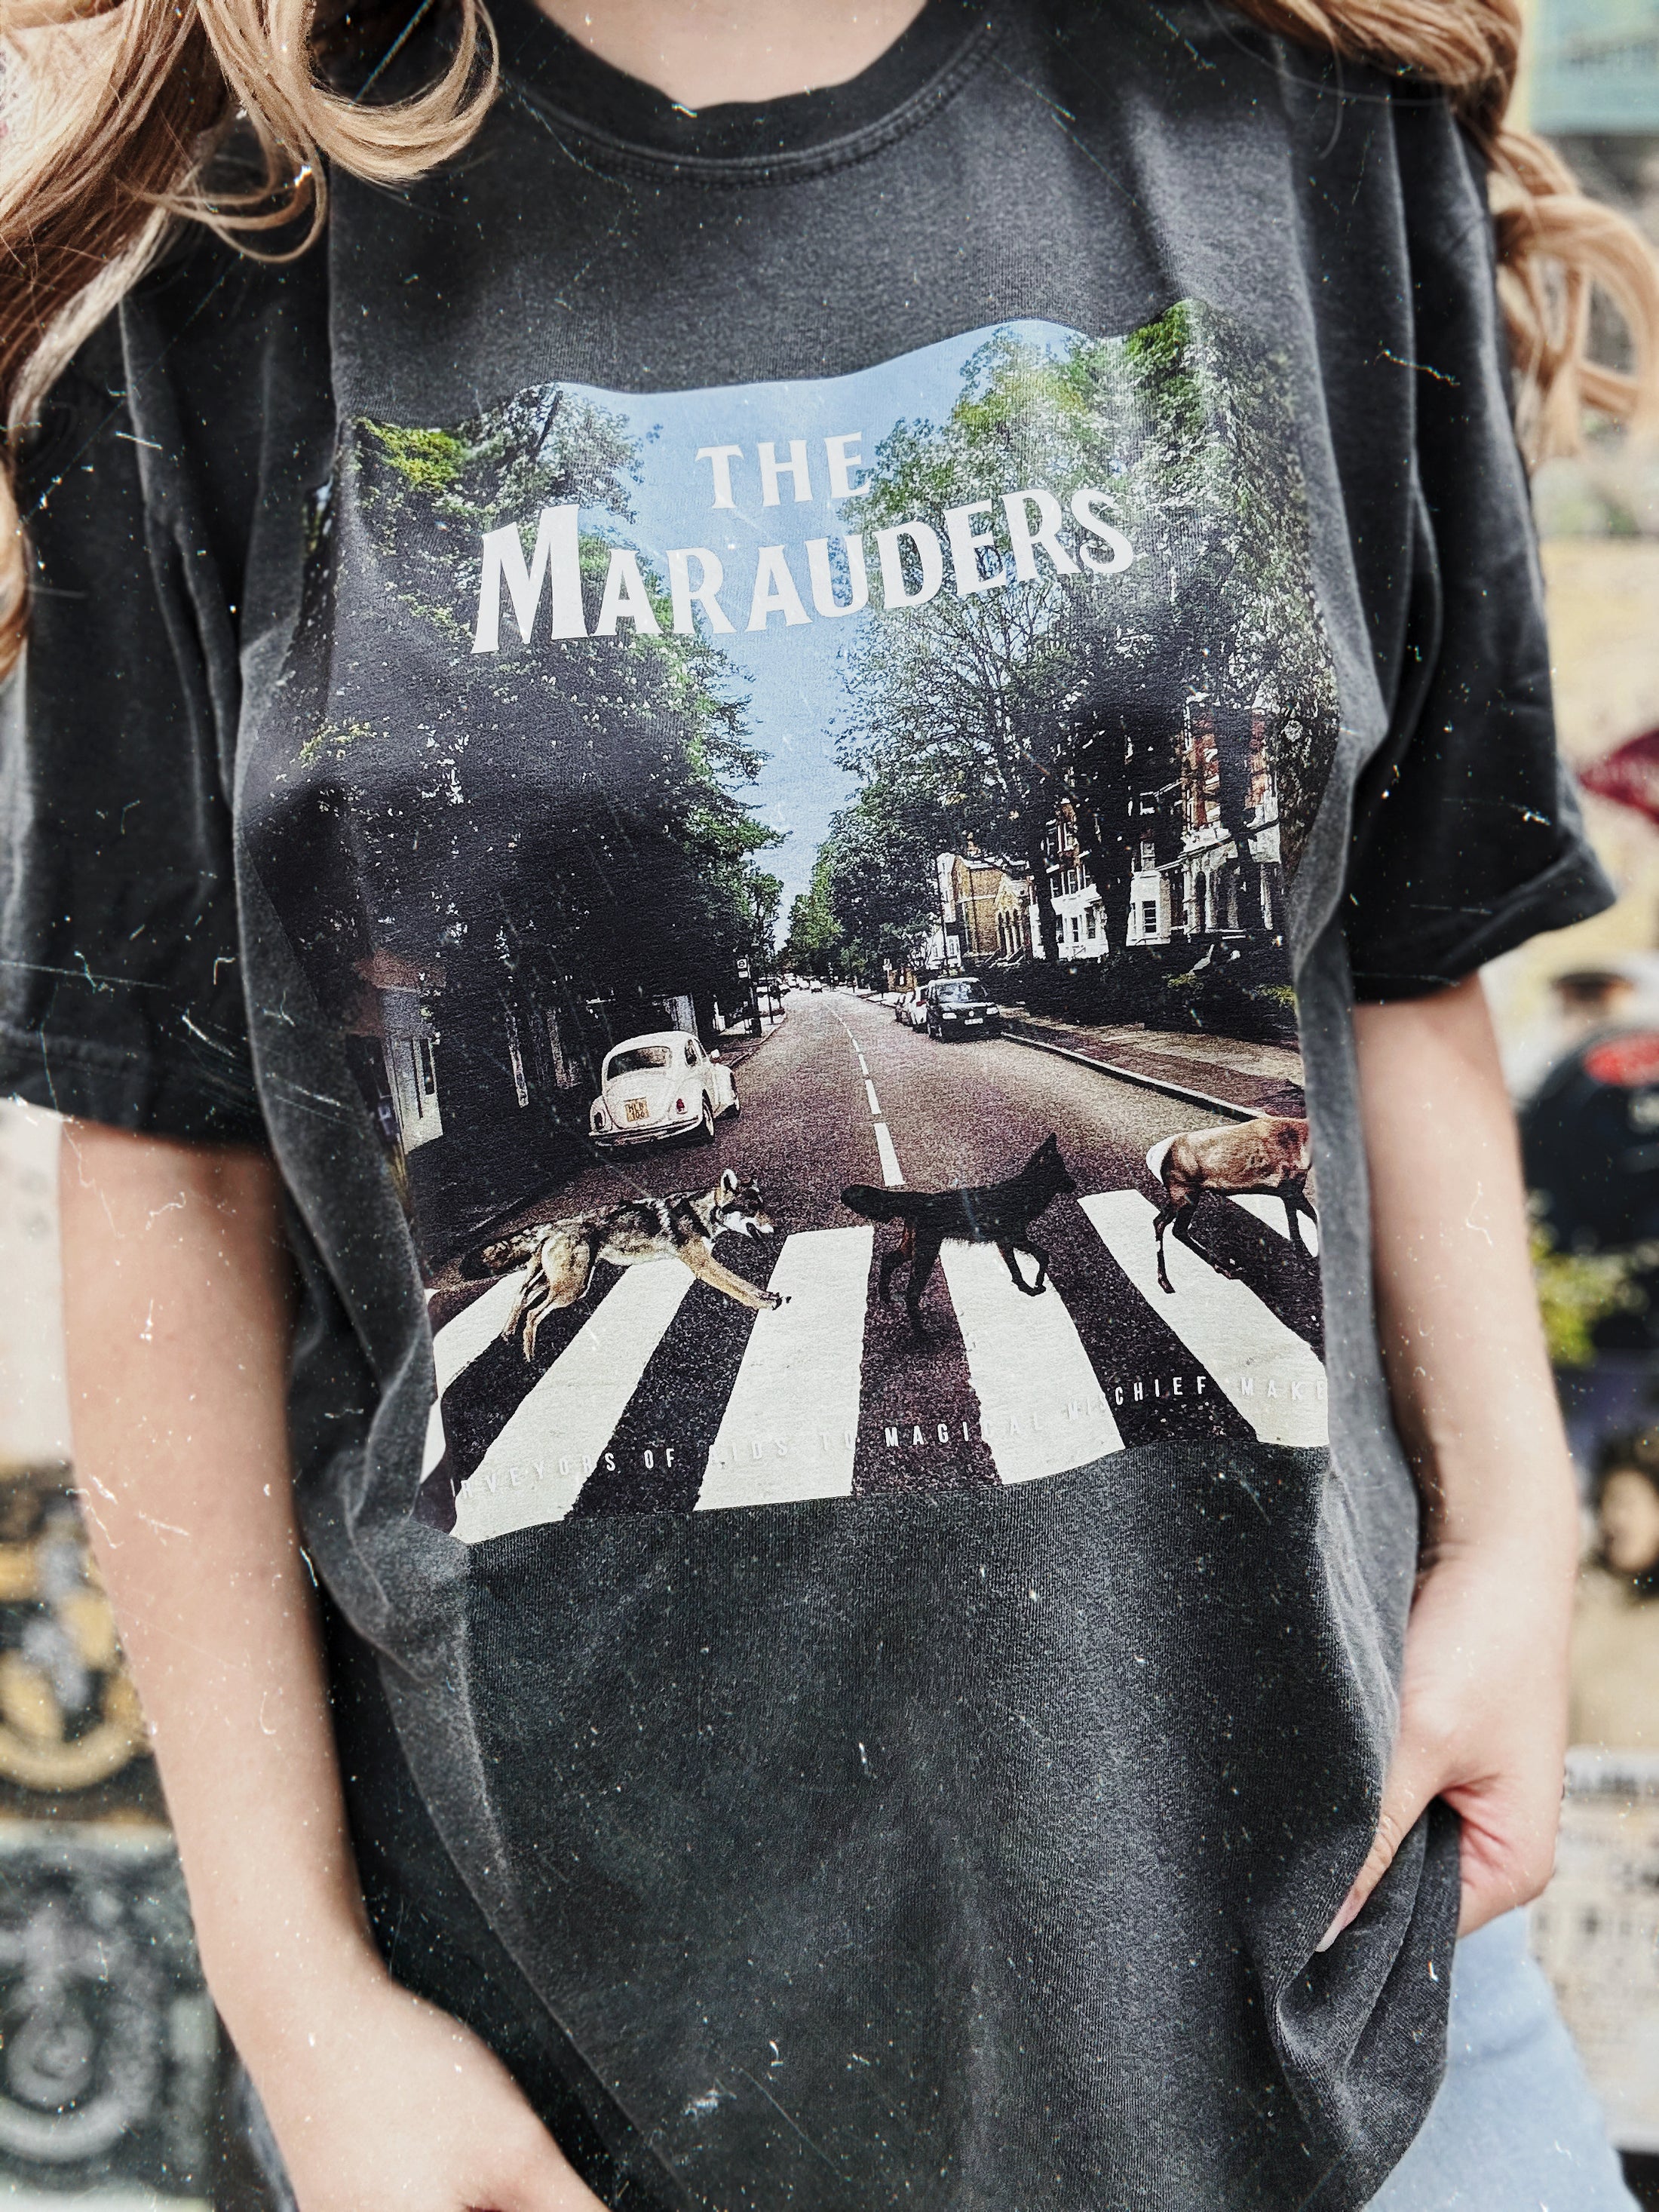 Marauders Abbey Road Garment Dyed Tee